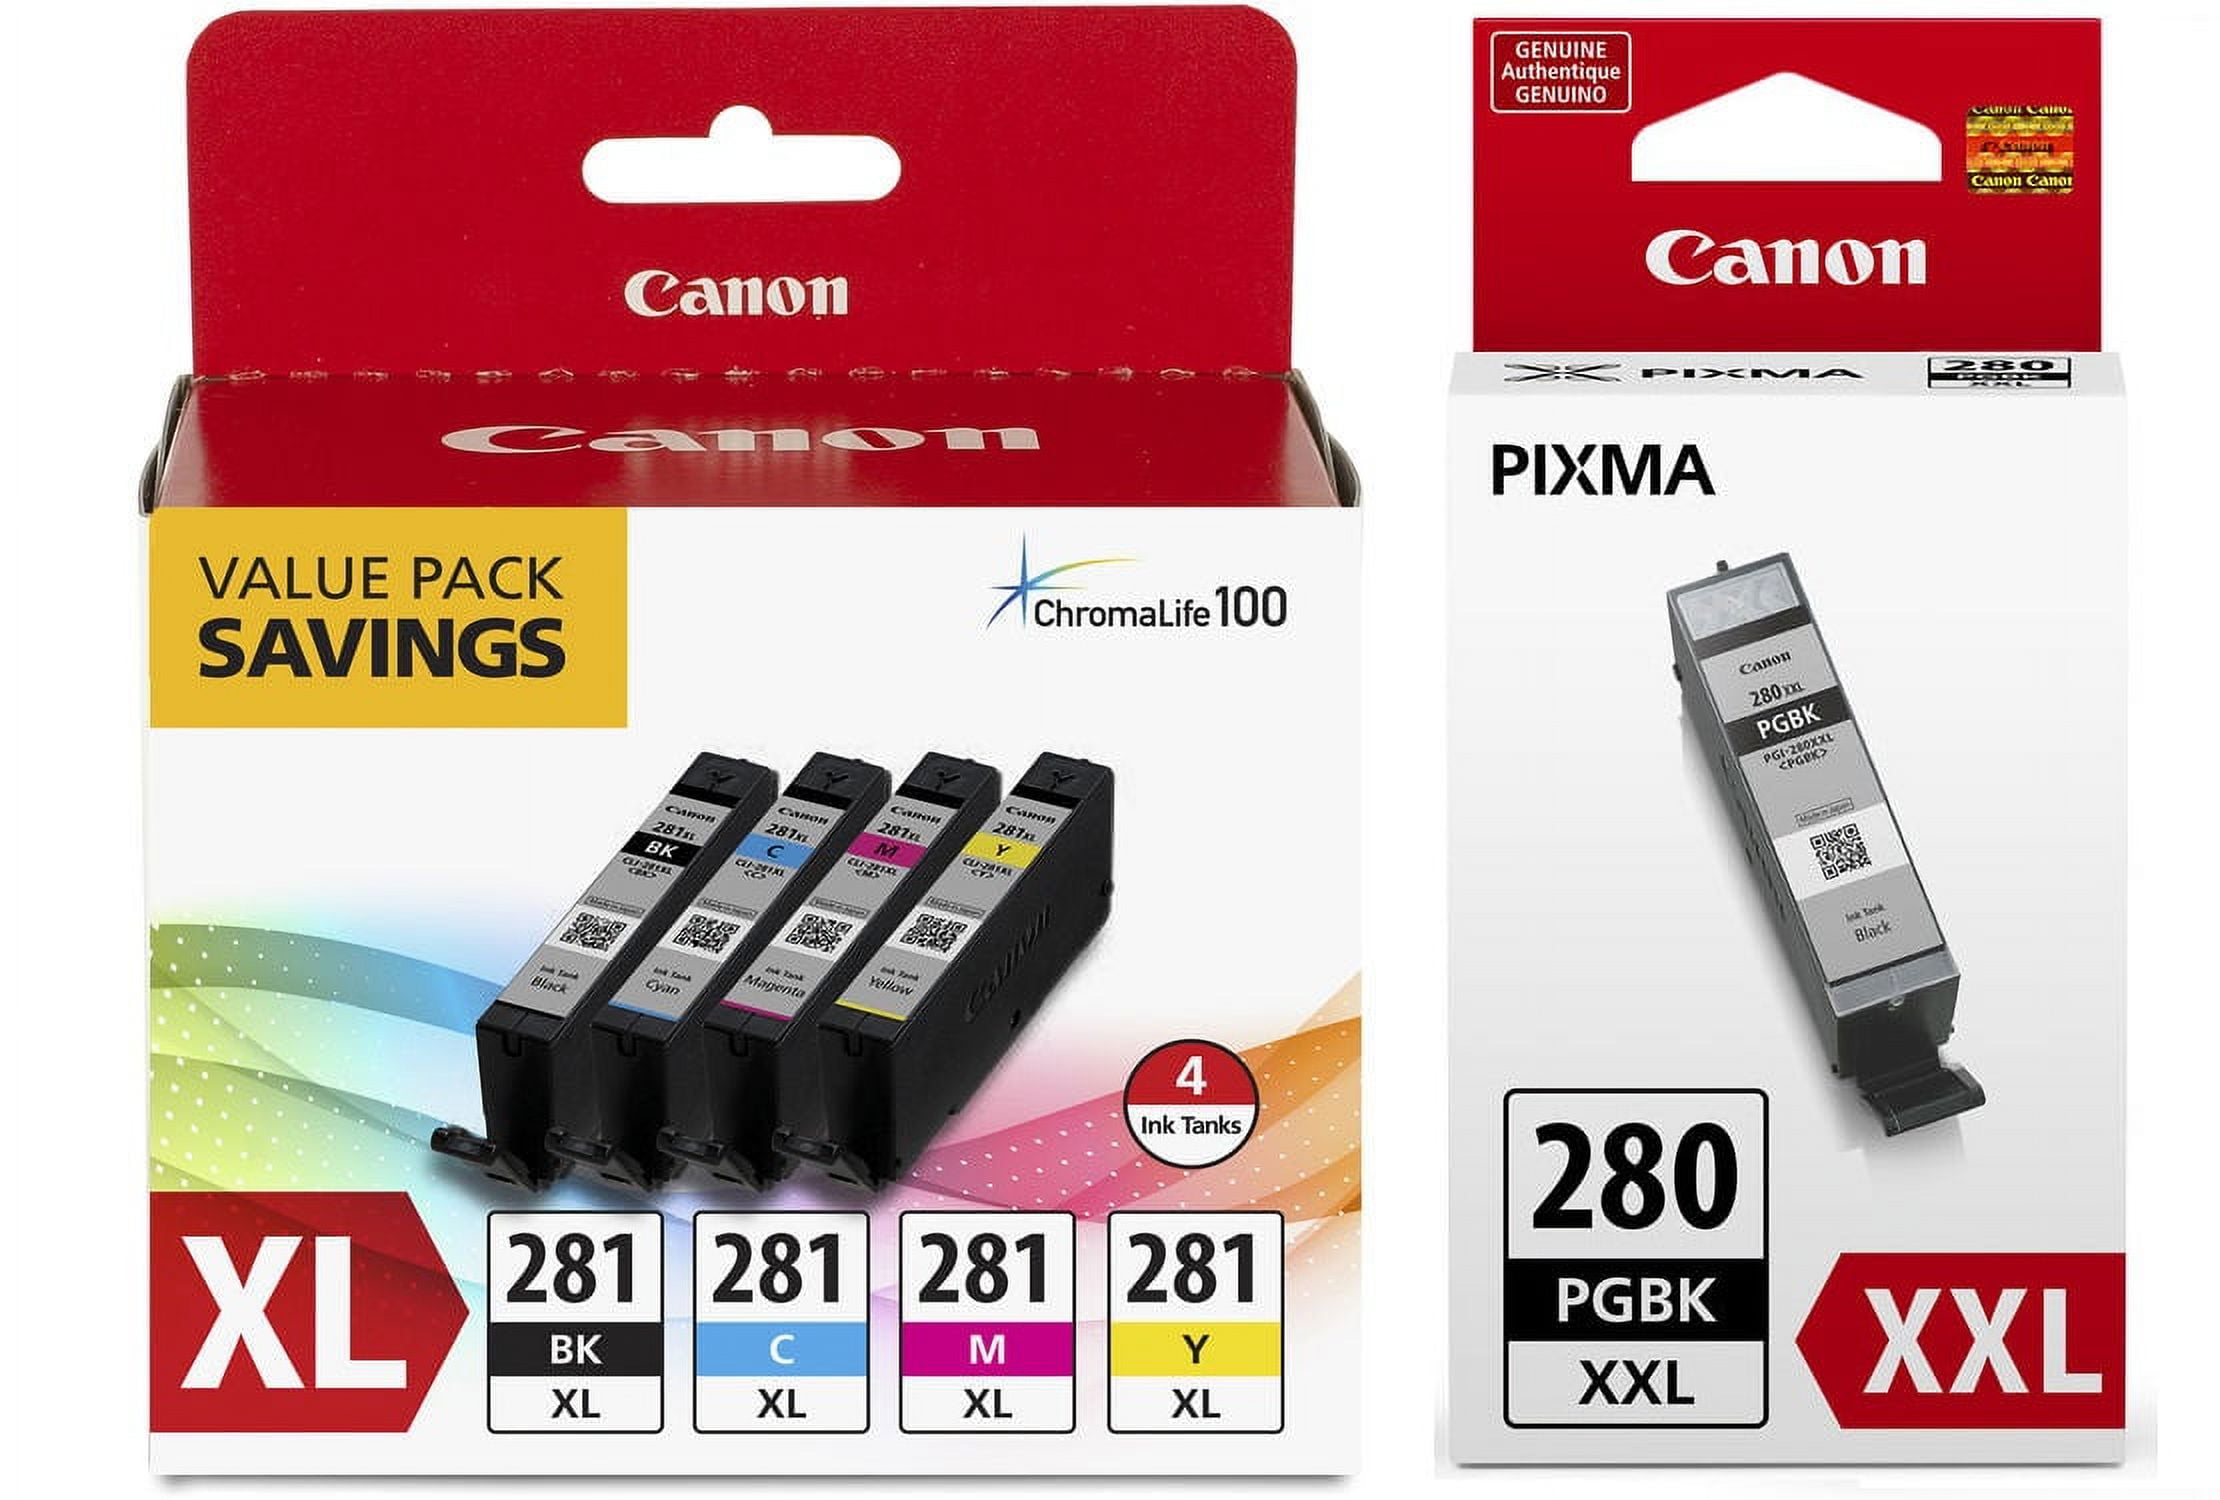 Cartouche compatible avec Canon Pixma TS8050, TS8051, TS8052, TS8053,  TS9050, TS9055 remplace Canon PGI-570 XL Noire - T3AZUR - La Poste